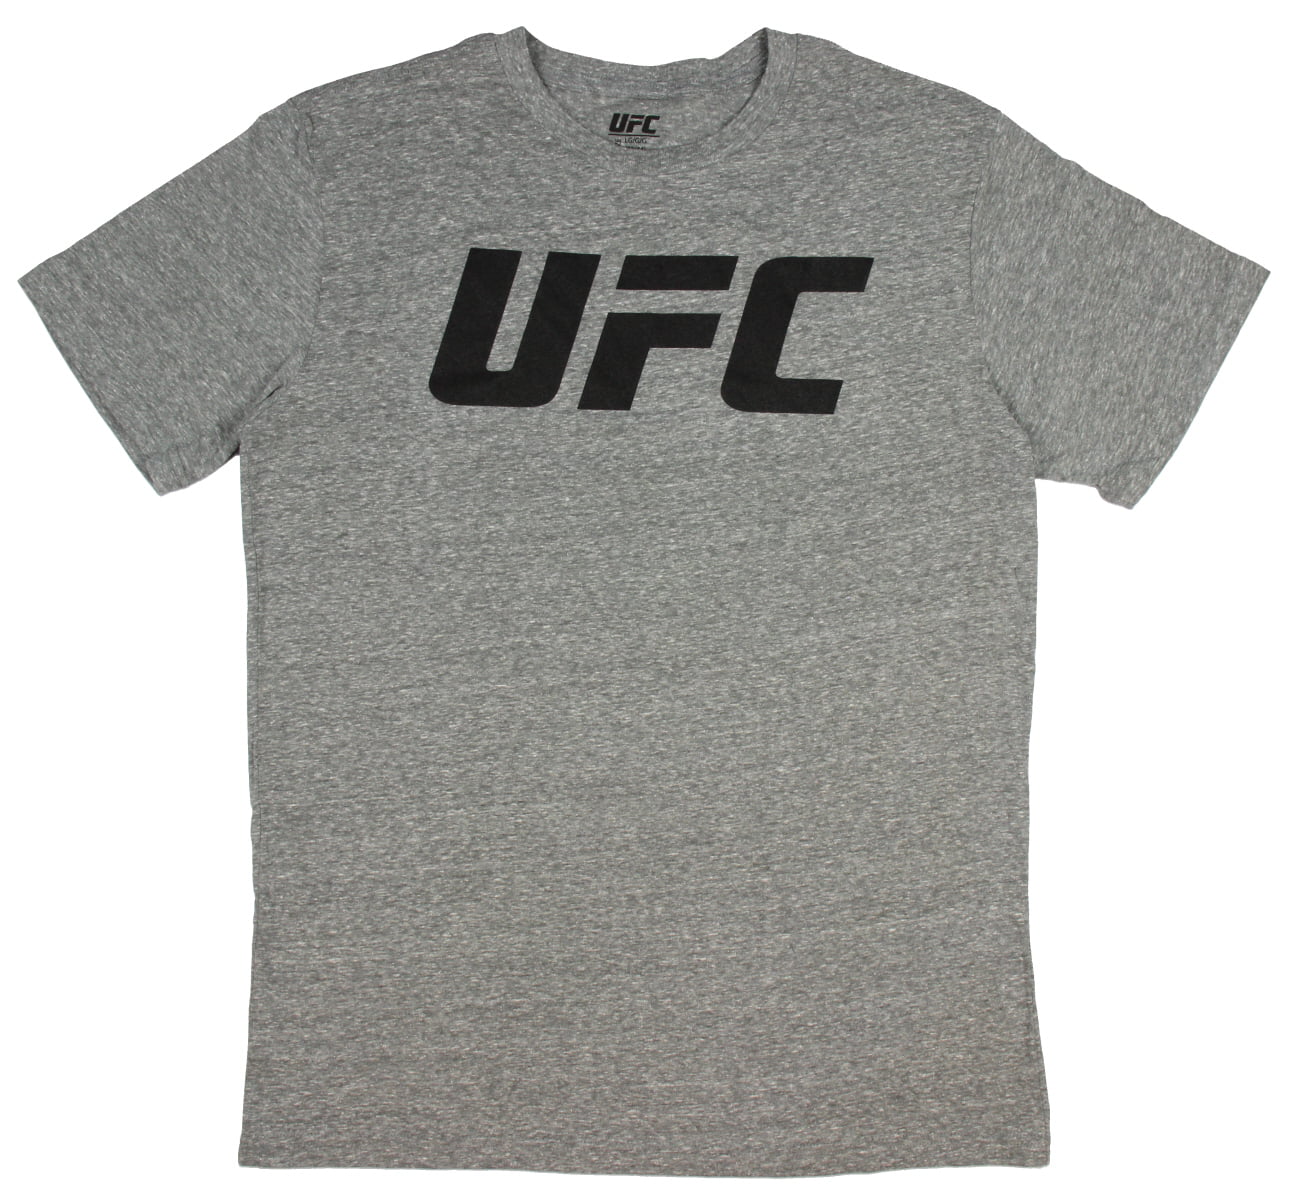 ultimate fighting championship shirt